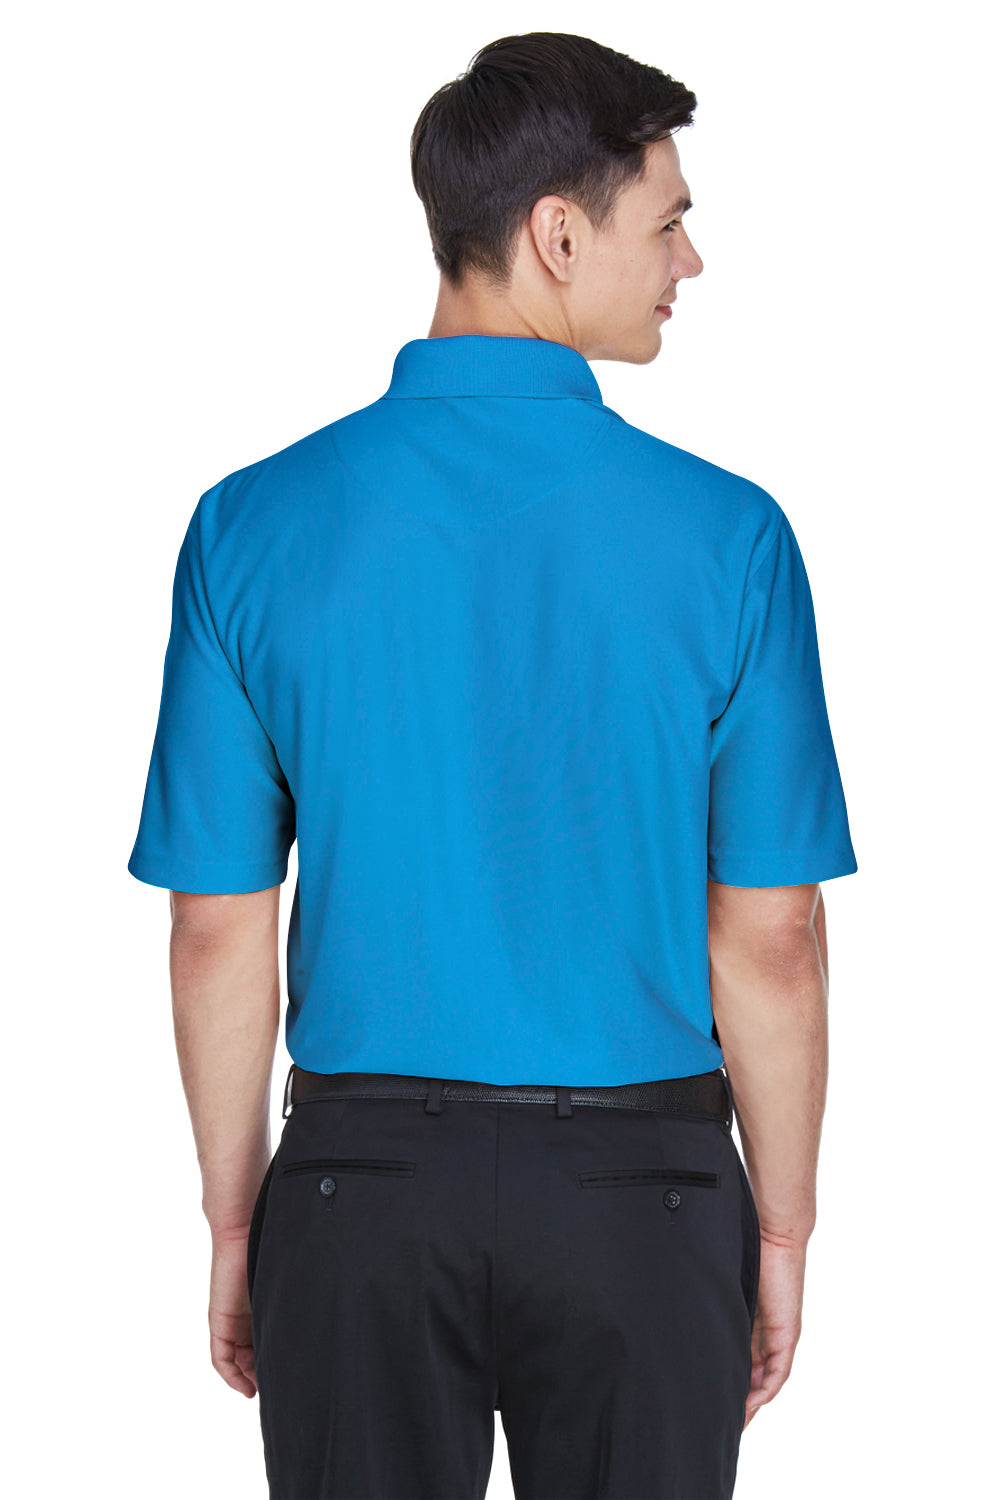 UltraClub 8415 Mens Cool & Dry Elite Performance Moisture Wicking Short Sleeve Polo Shirt Pacific Blue Back